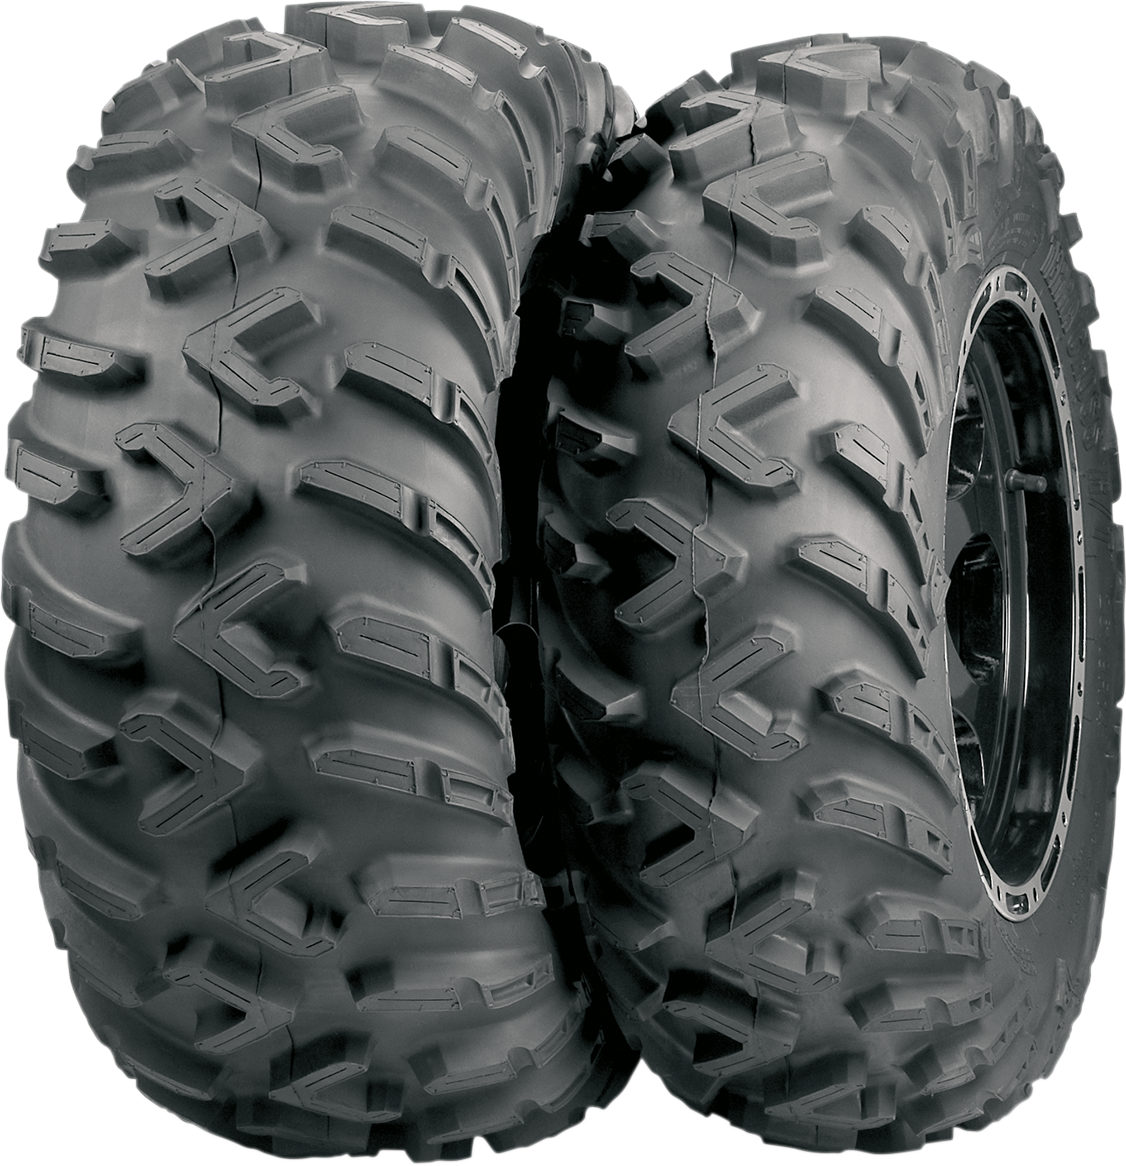 ITP Tire - Terracross R/T - Rear - 25x10R12 - 6 Ply 560424